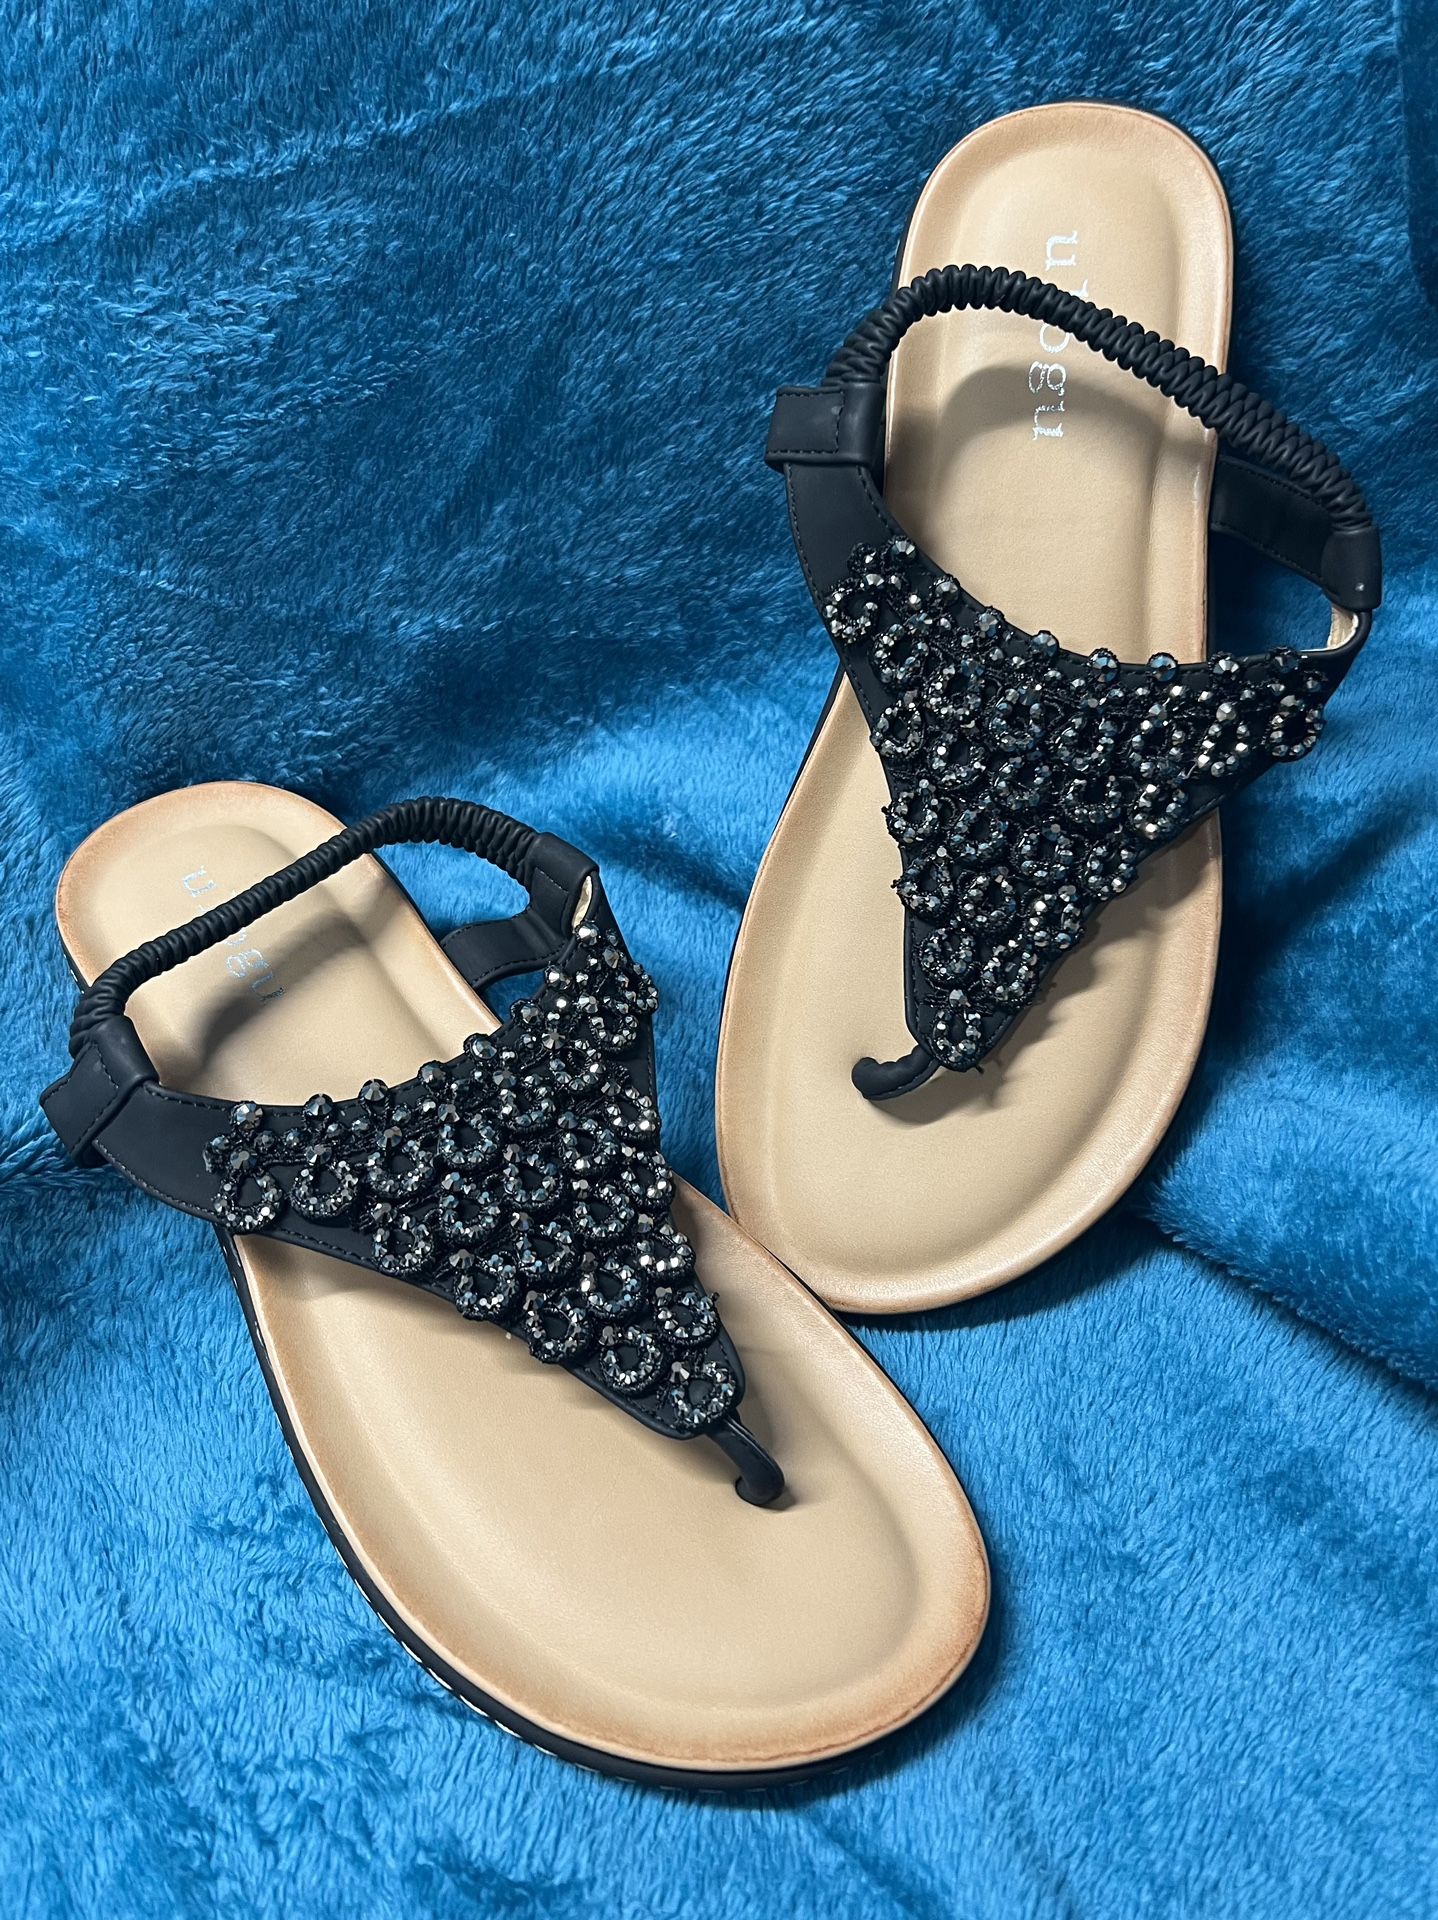 ulogu Women's Flat Sandals Dressy Summer Beach Shoes Casual Comfortable Boho Rhinestone Thong Flip-Flop w Elastic Strap SIZE 38